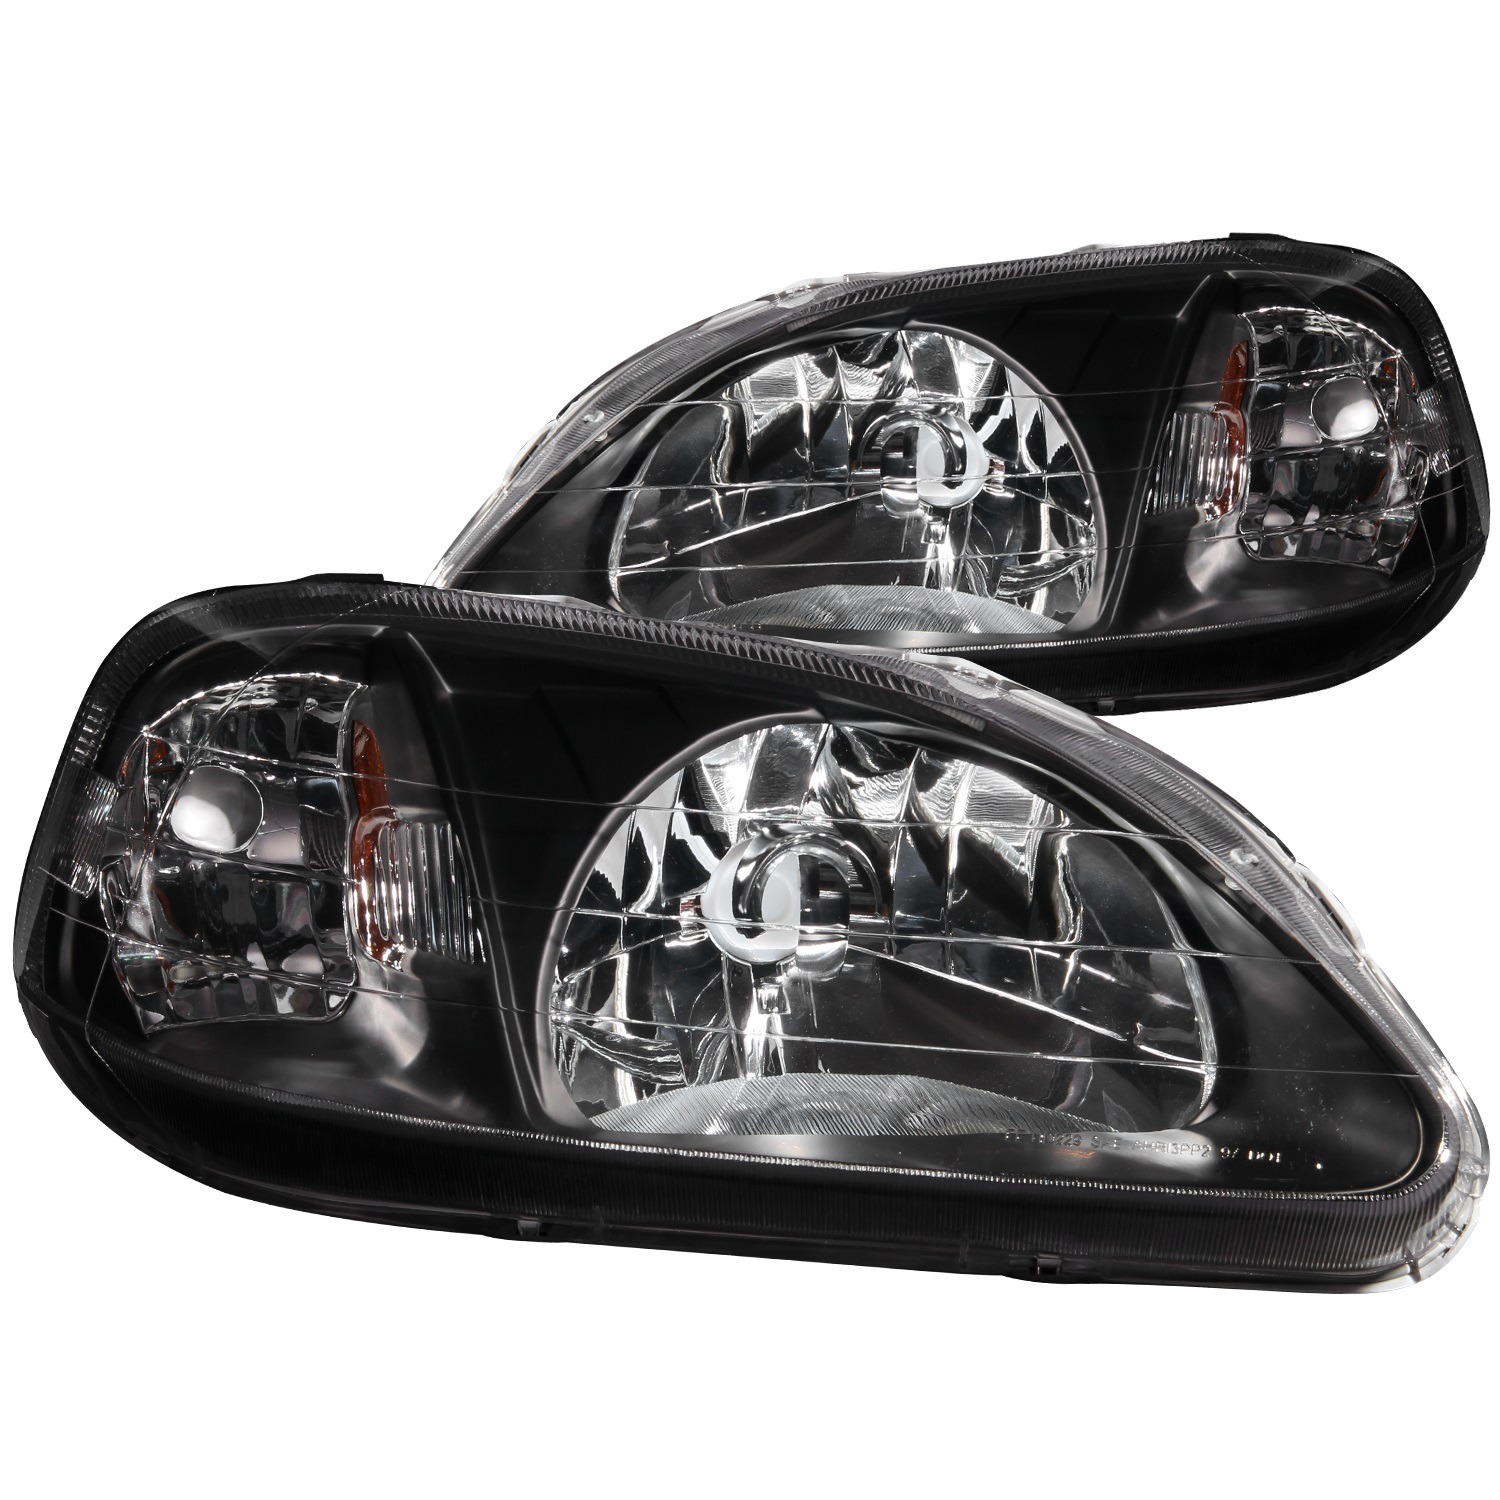 Anzo USA Anzo USA 121070 Crystal Headlight Set Fits 99-00 Civic